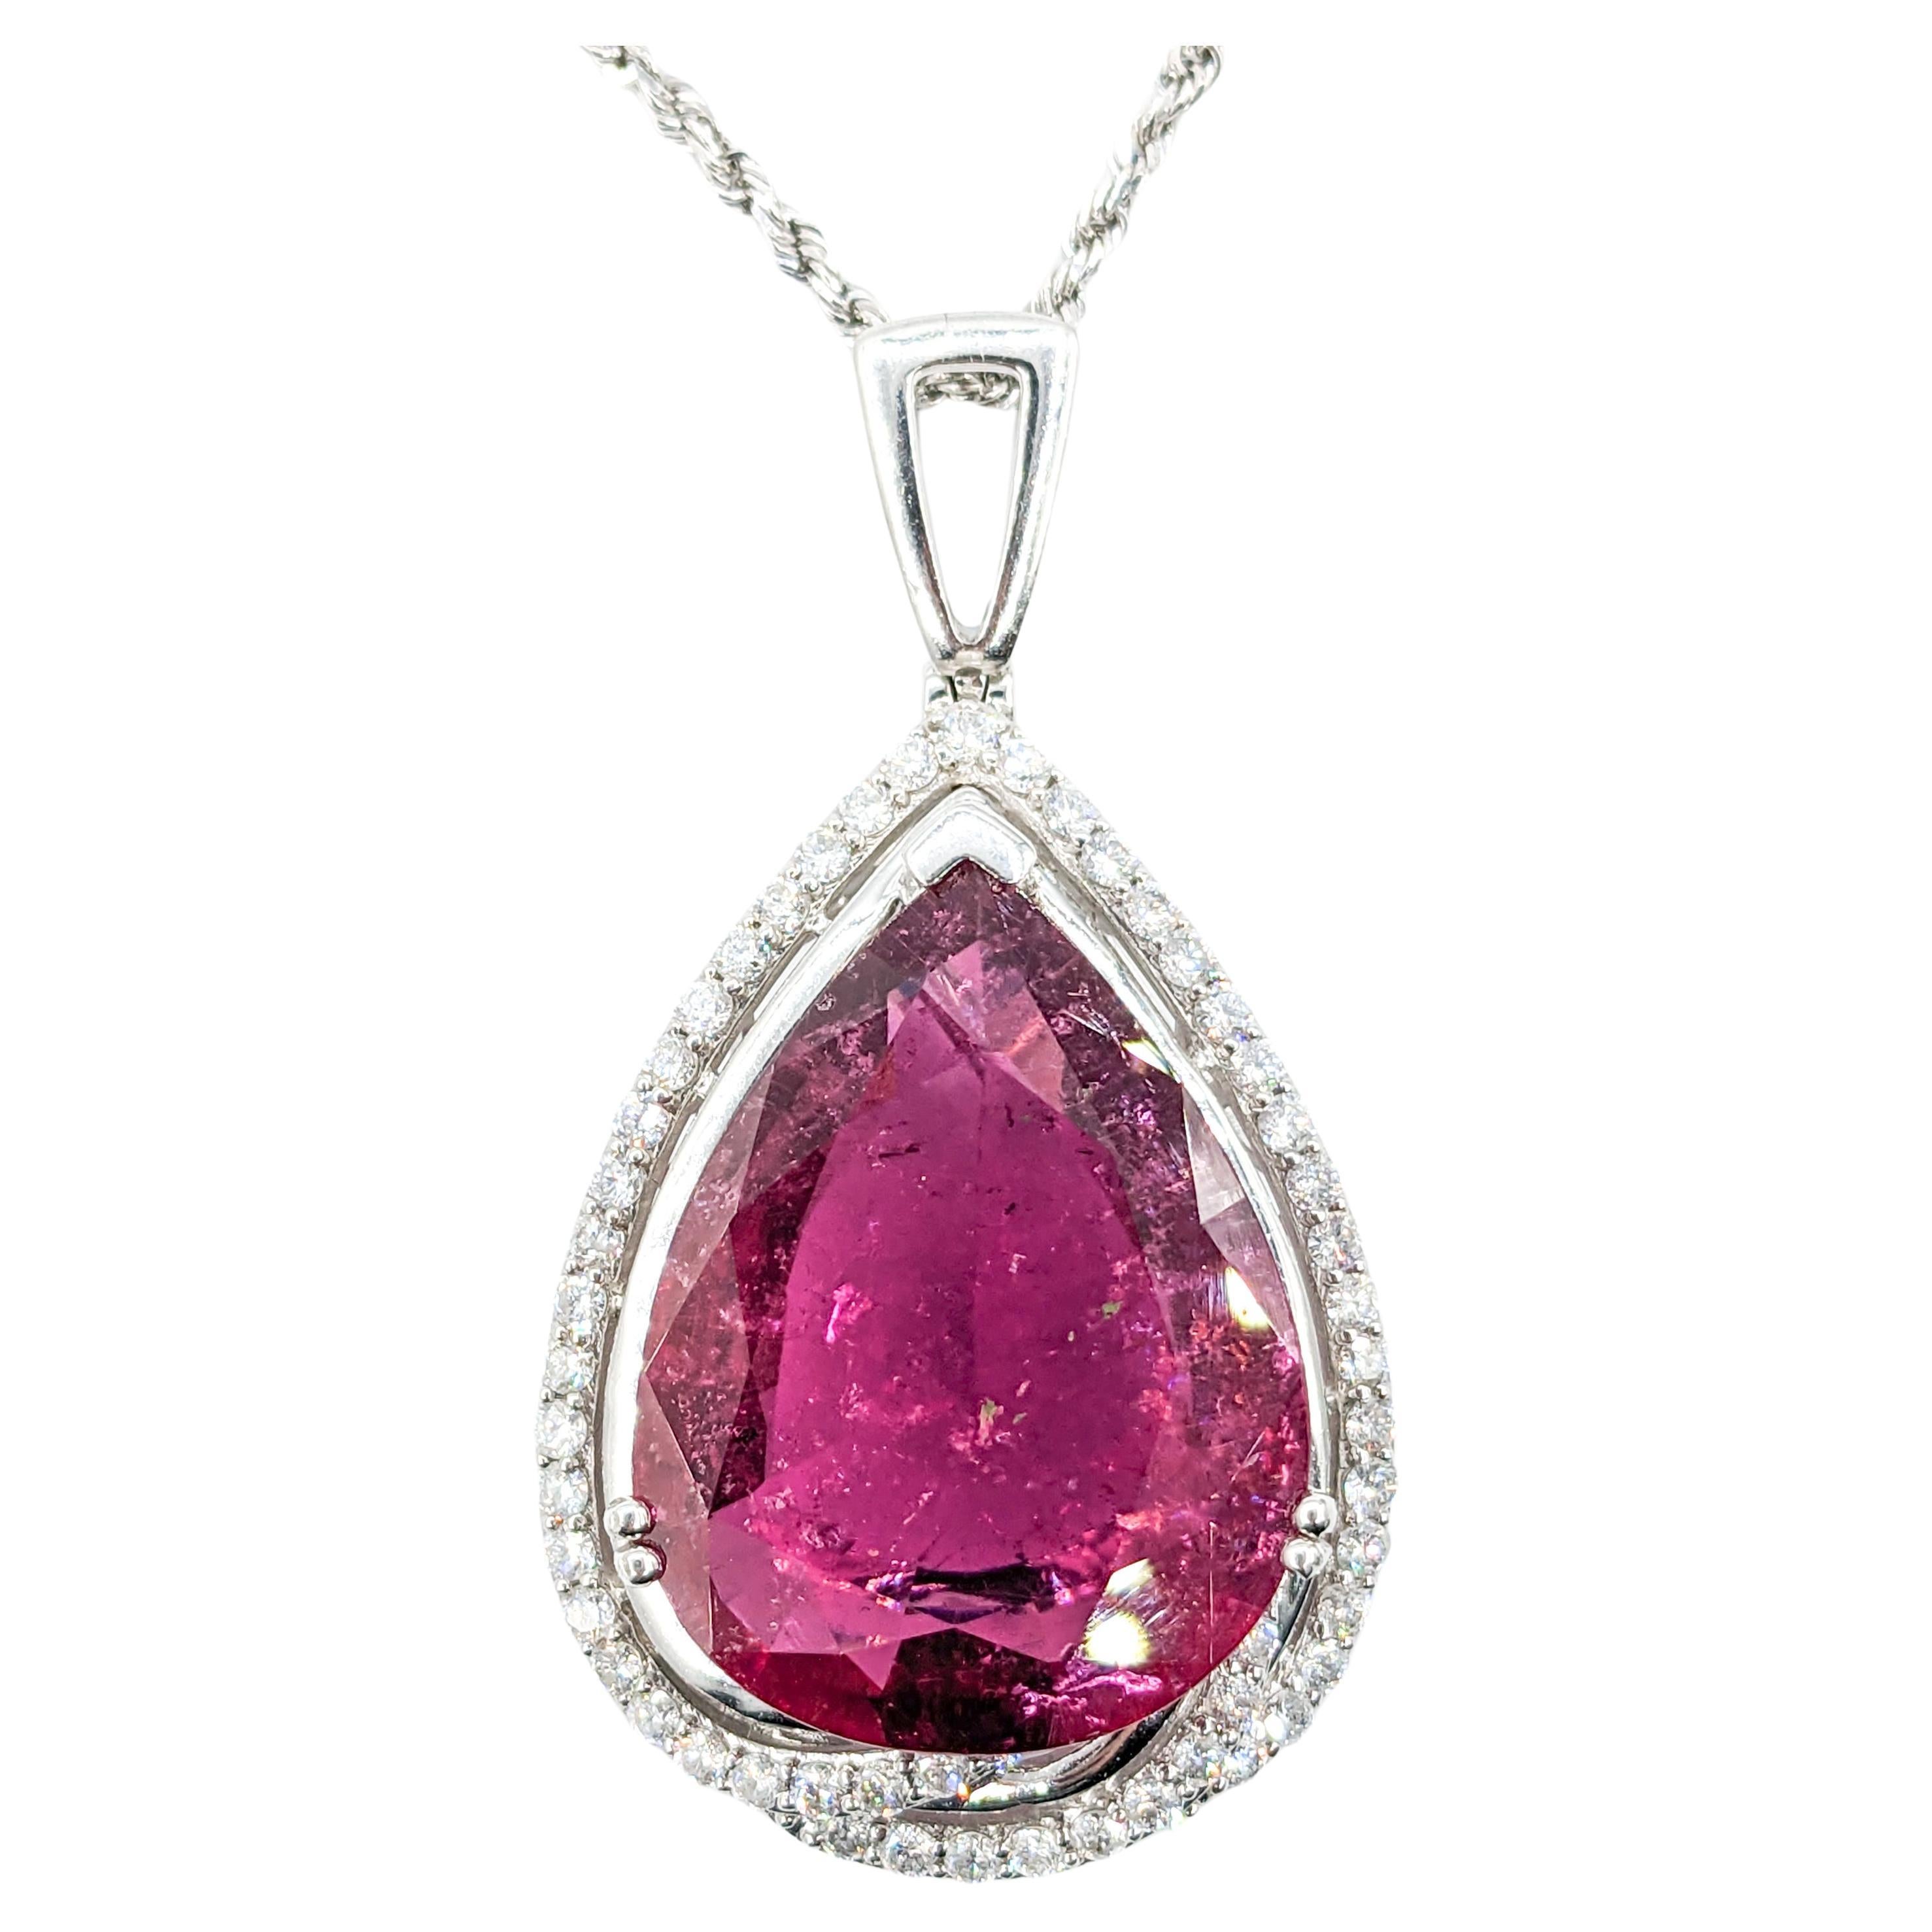 Collier en platine avec tourmaline rubellite rose de 35,75 ct GIA et diamant